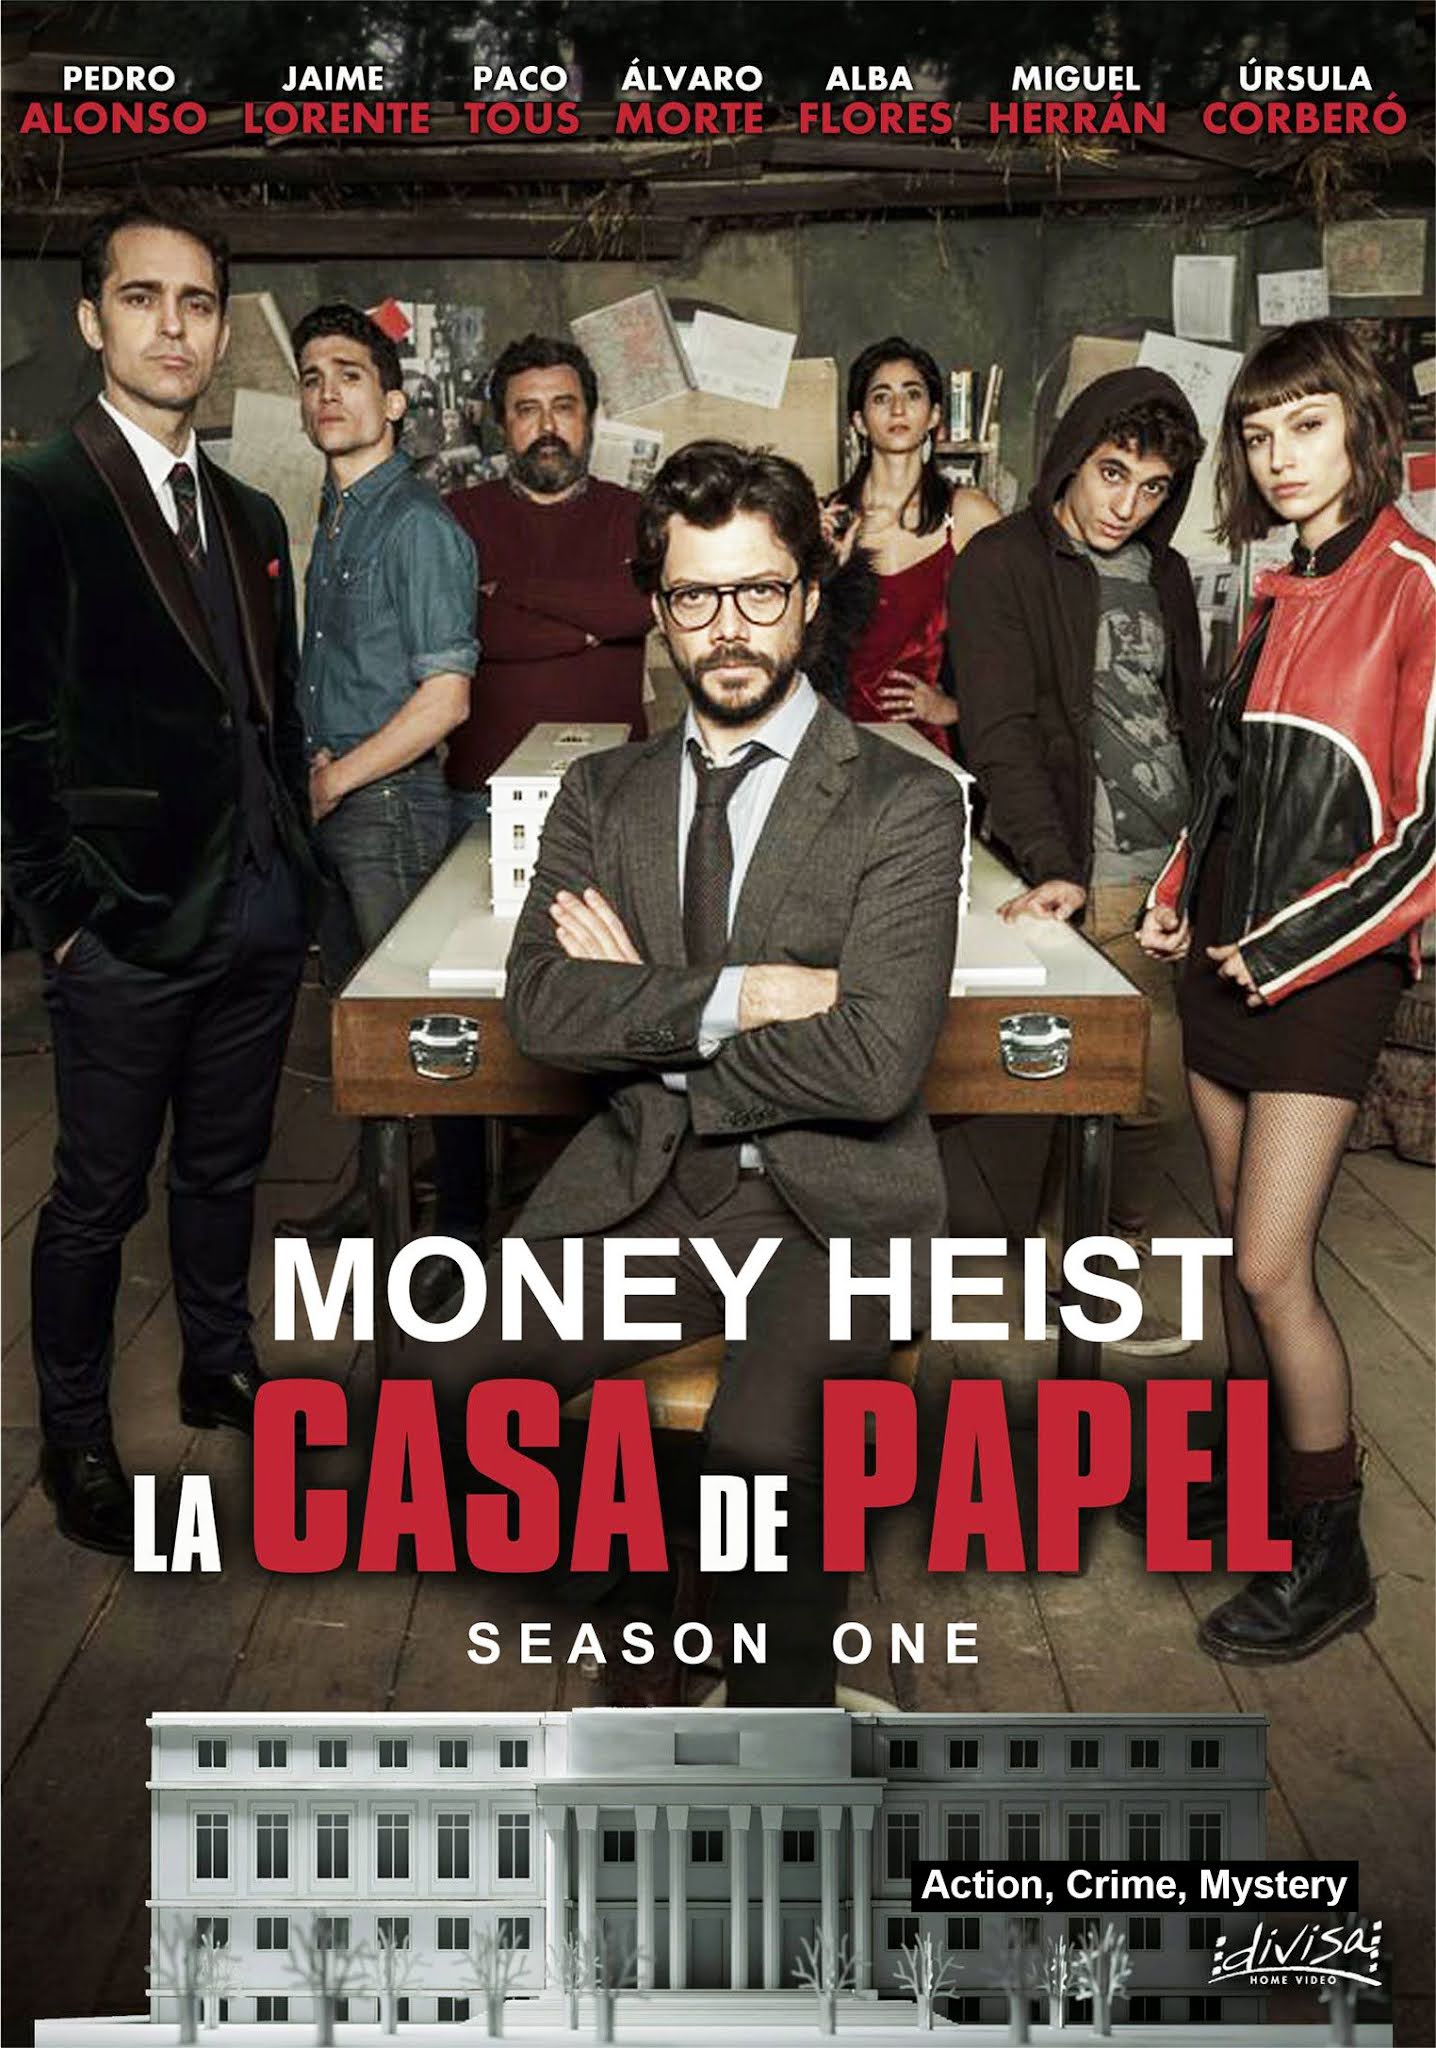 MONEY HEIST (La Casa de Papel) SEASON 1 Episode 1 - 13